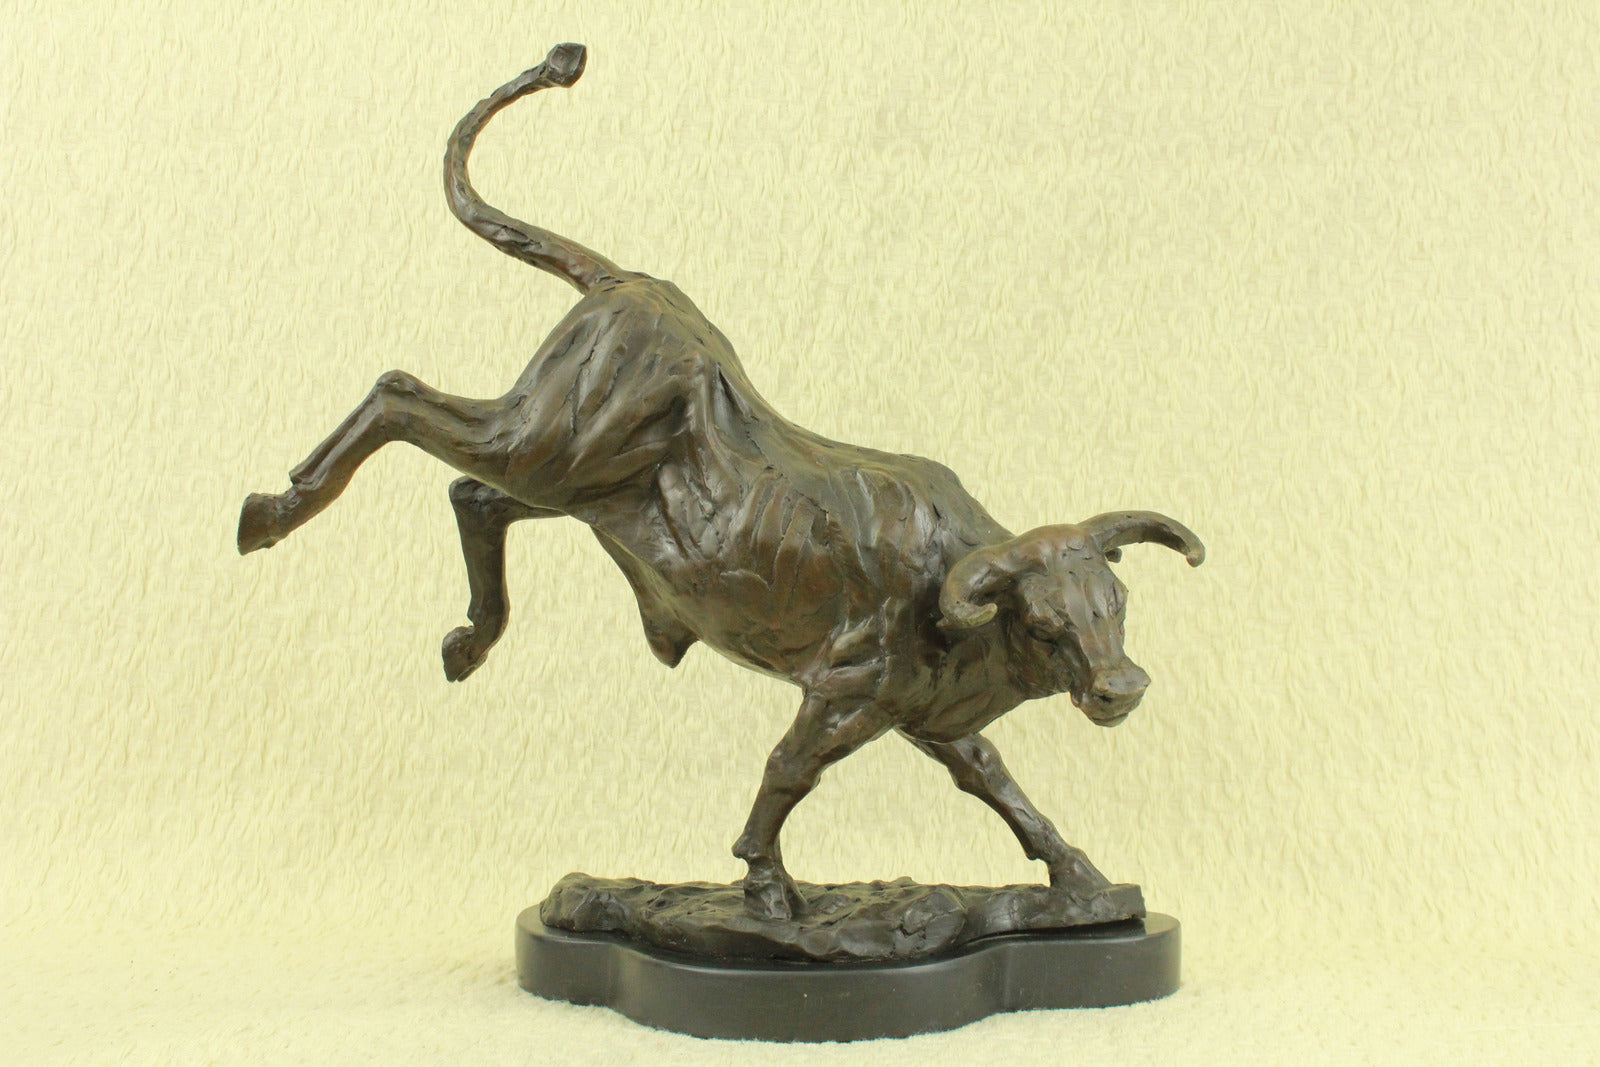 Handcrafted bronze sculpture SALE Des Office Broker Market Stock Large Cast Hot